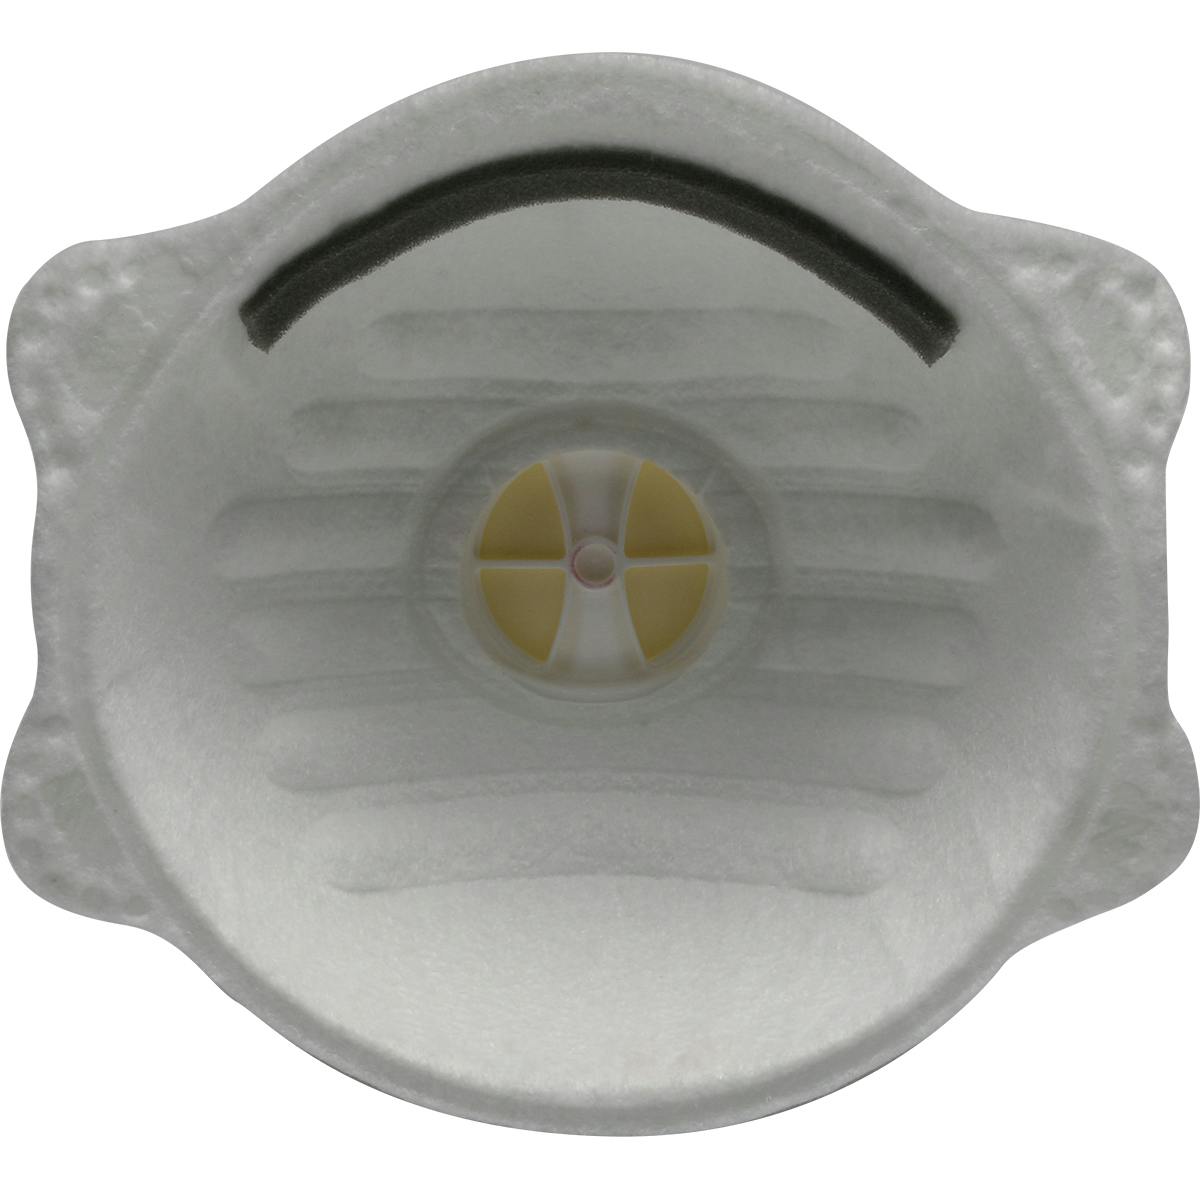 Standard N95 Disposable Respirator - 10 Pack, White (270-RPD514N95) - OS_0